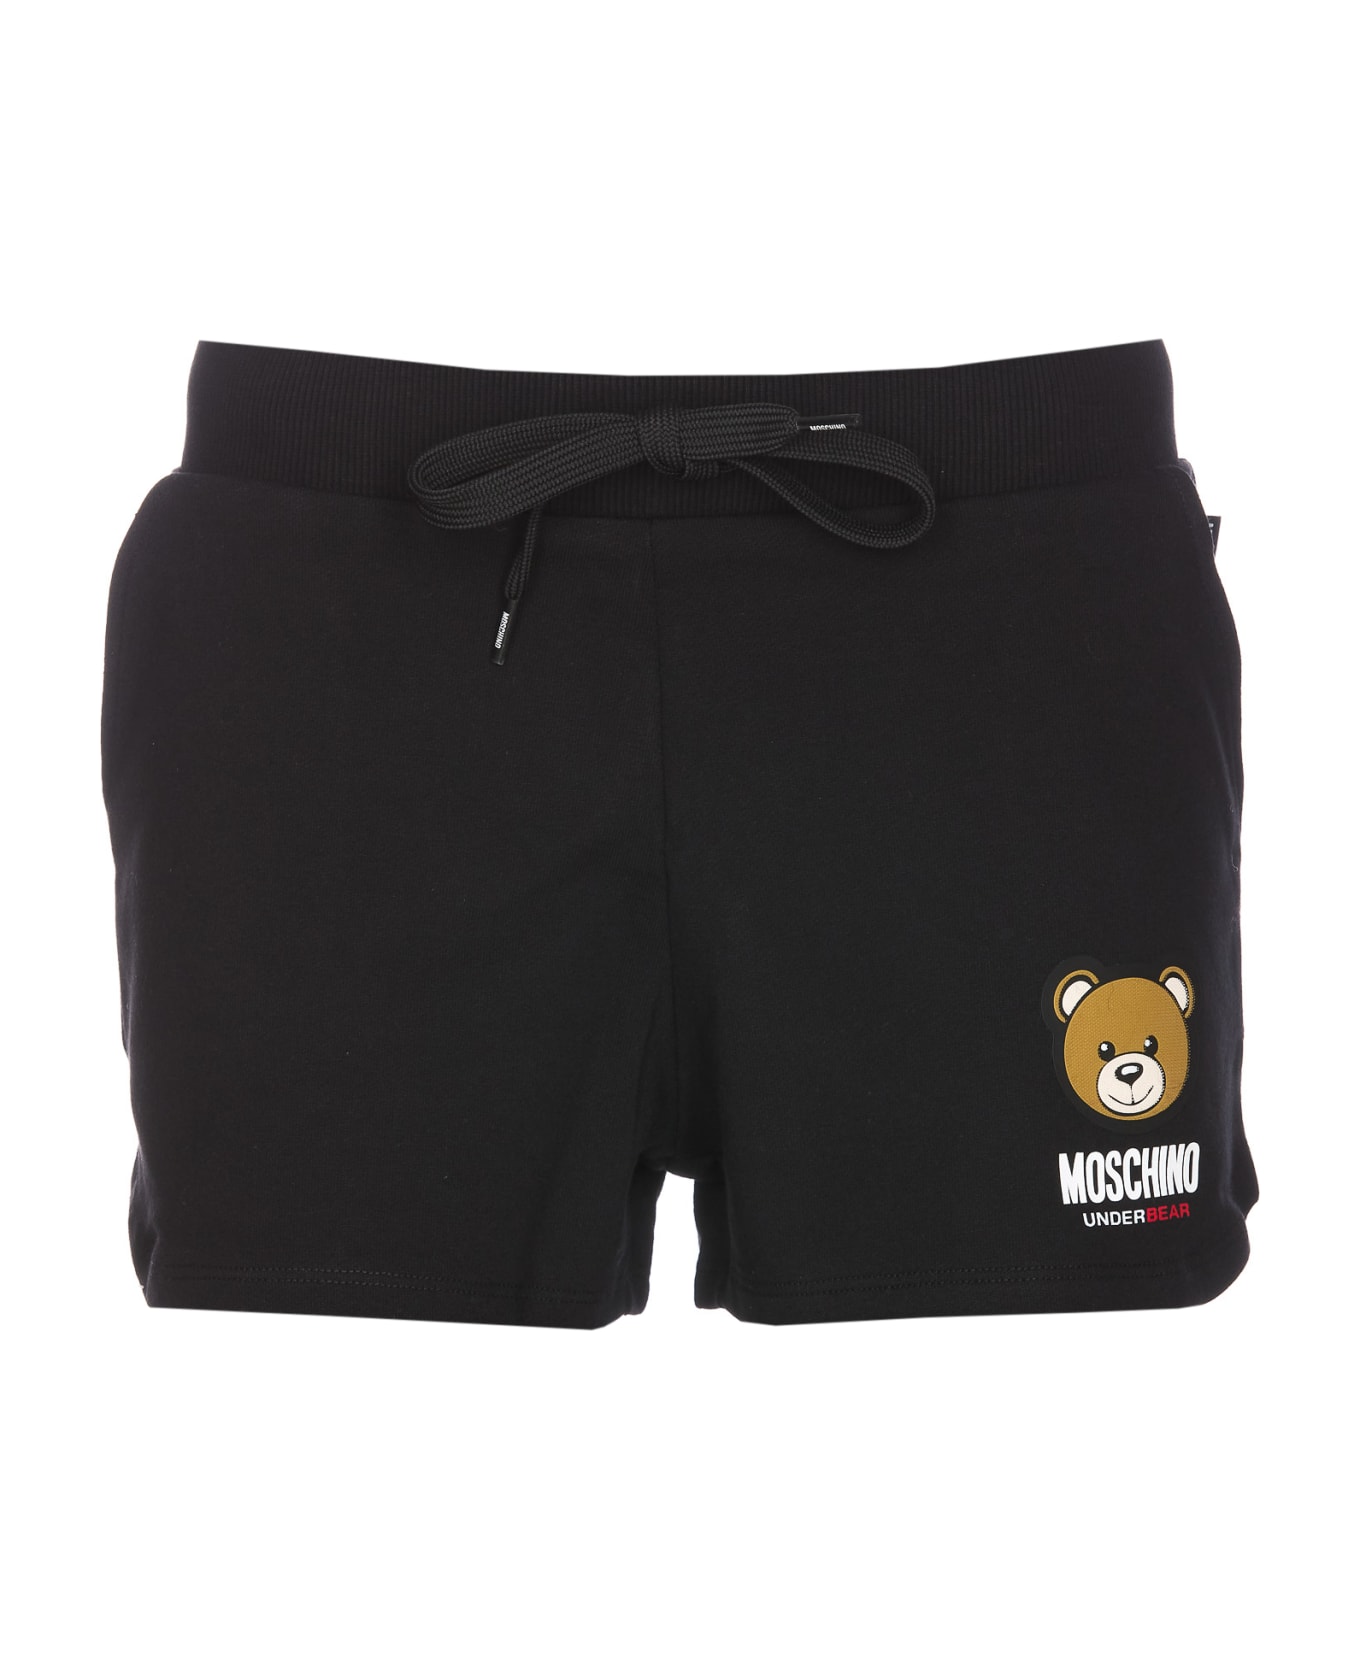 Moschino Underbear Shorts - Black